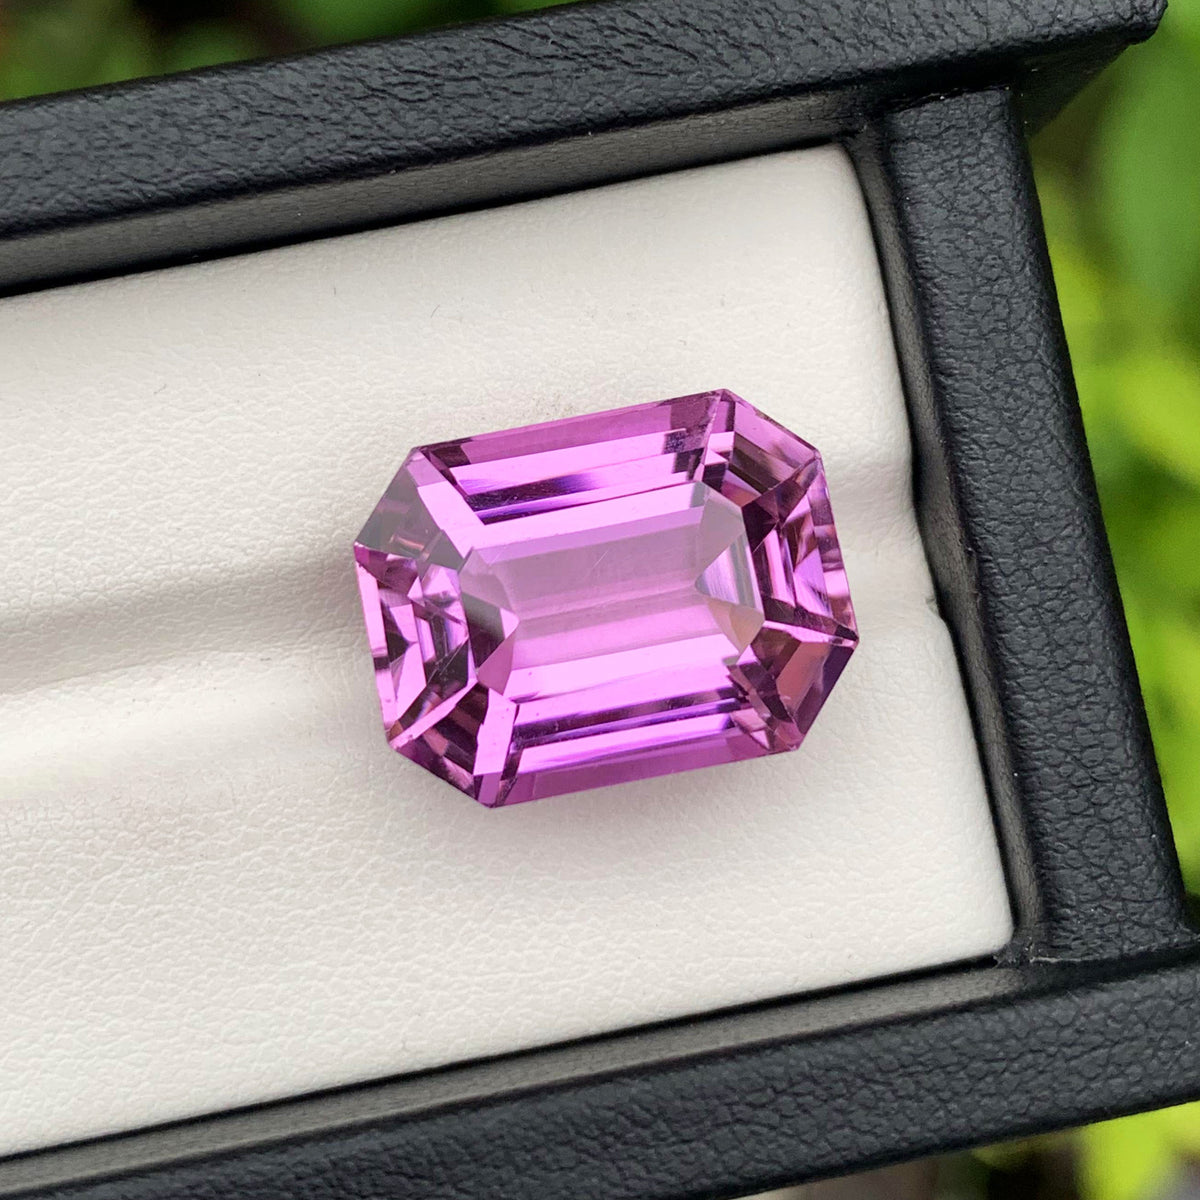 Deep Lilac Pink Kunzite Gemstone For jewelry, Flawless Kunzite Stone, Natural Kunzite Loose Gemstone, 26.25 CT